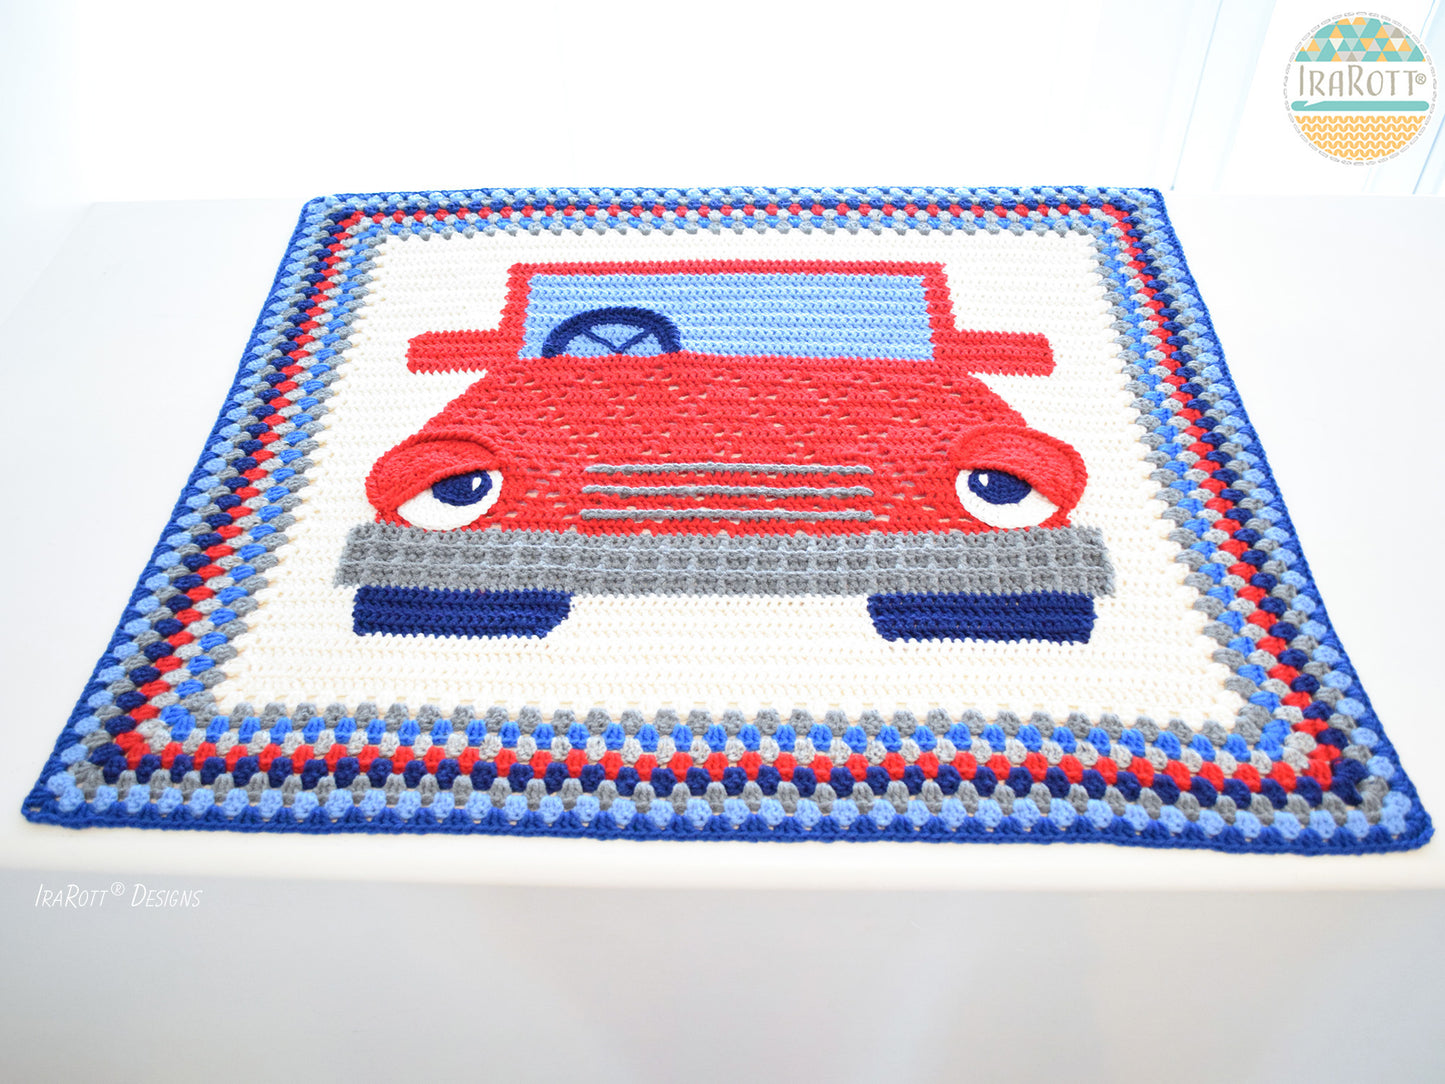 Jimmy The Hybrid Car Blanket Crochet Pattern